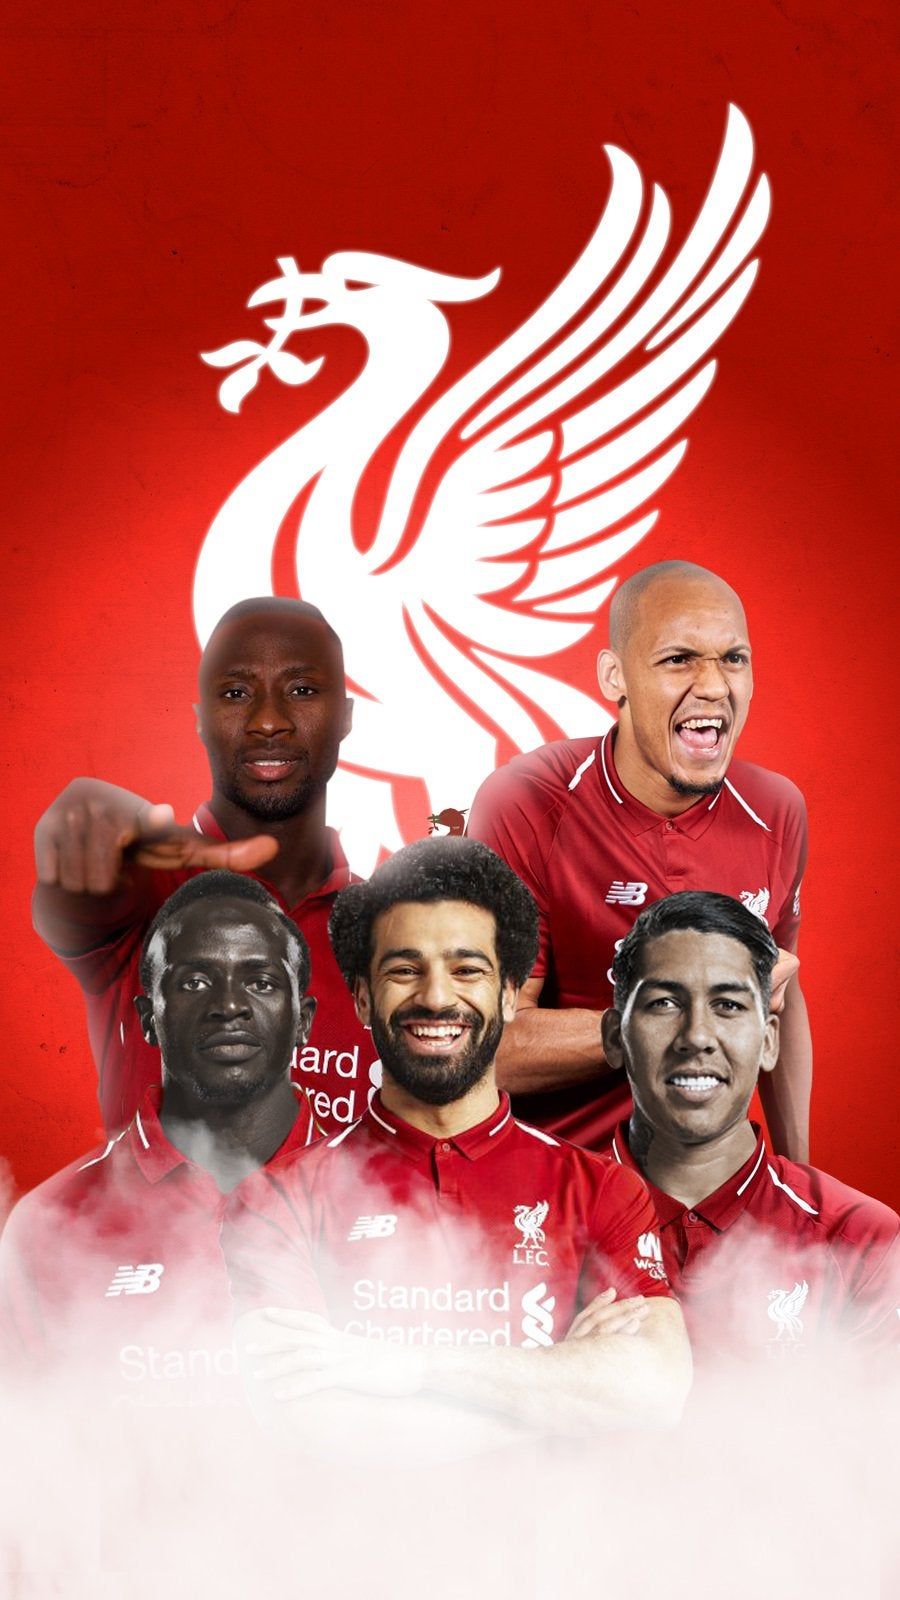 Liverpool wallpaper for new season!